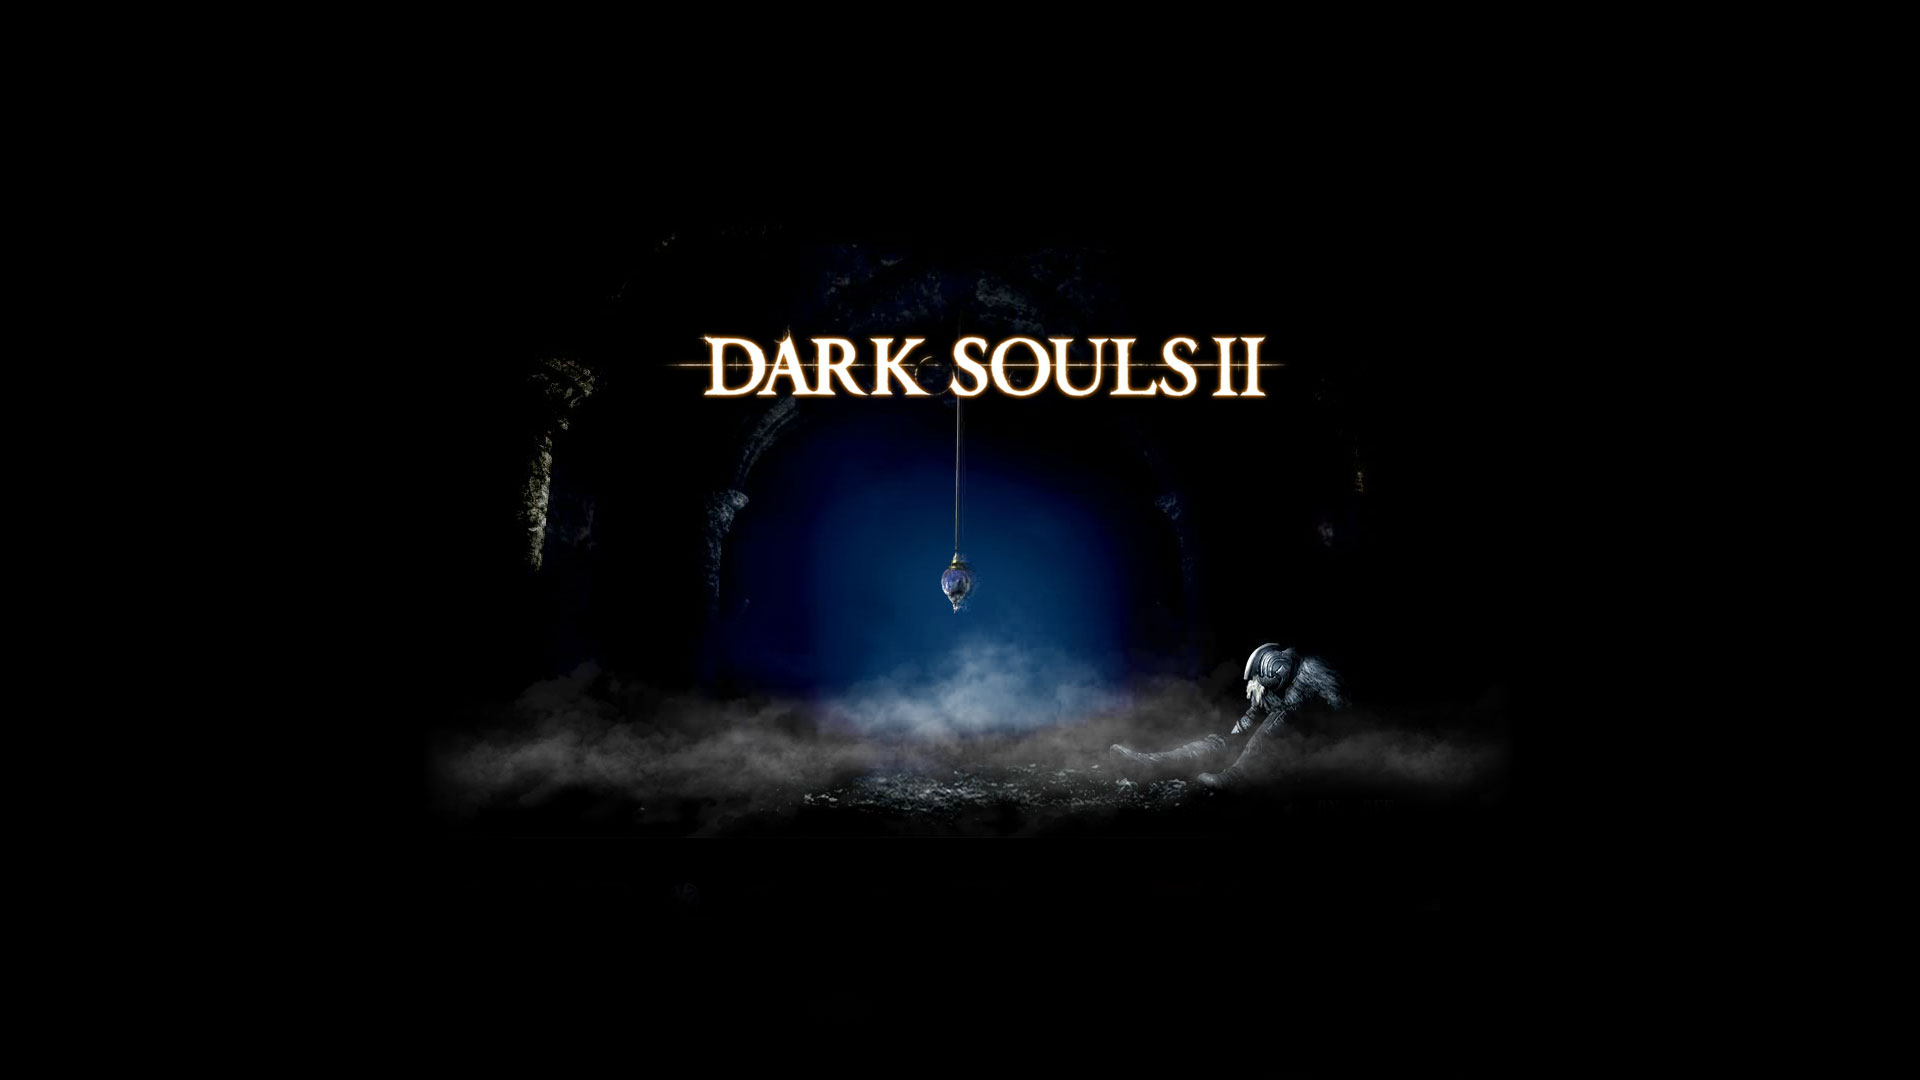 Dark Souls Wallpaper HD